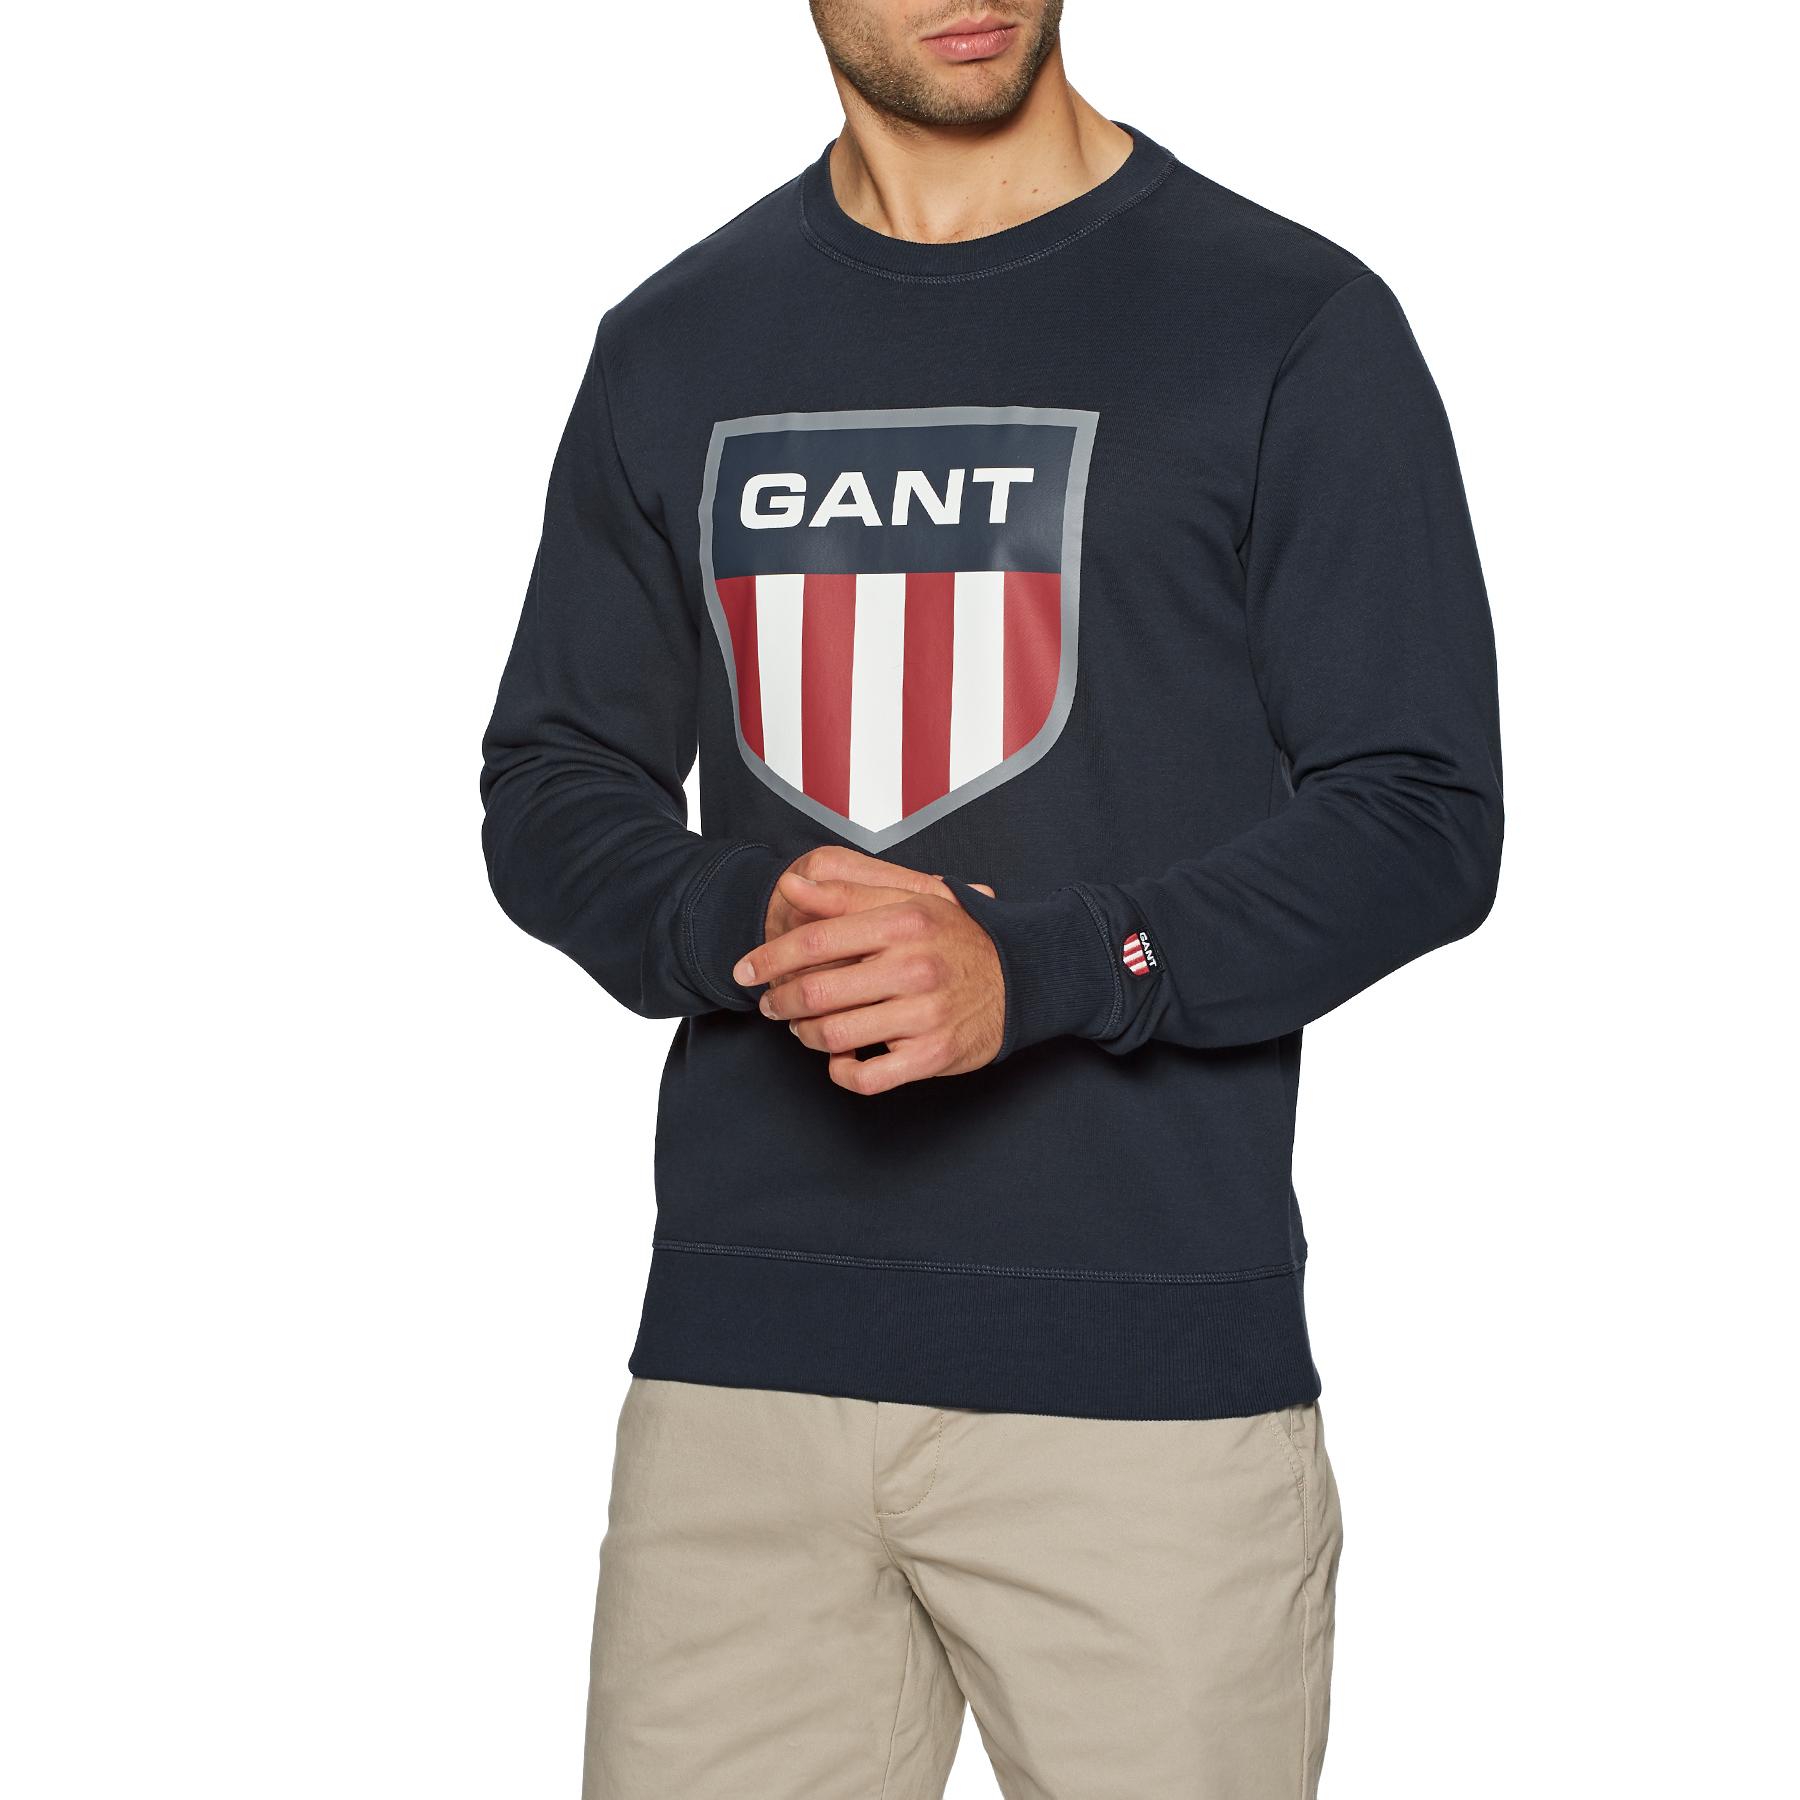 GANT Retro Shield Crew Neck Sweater in Blue for Men - Lyst